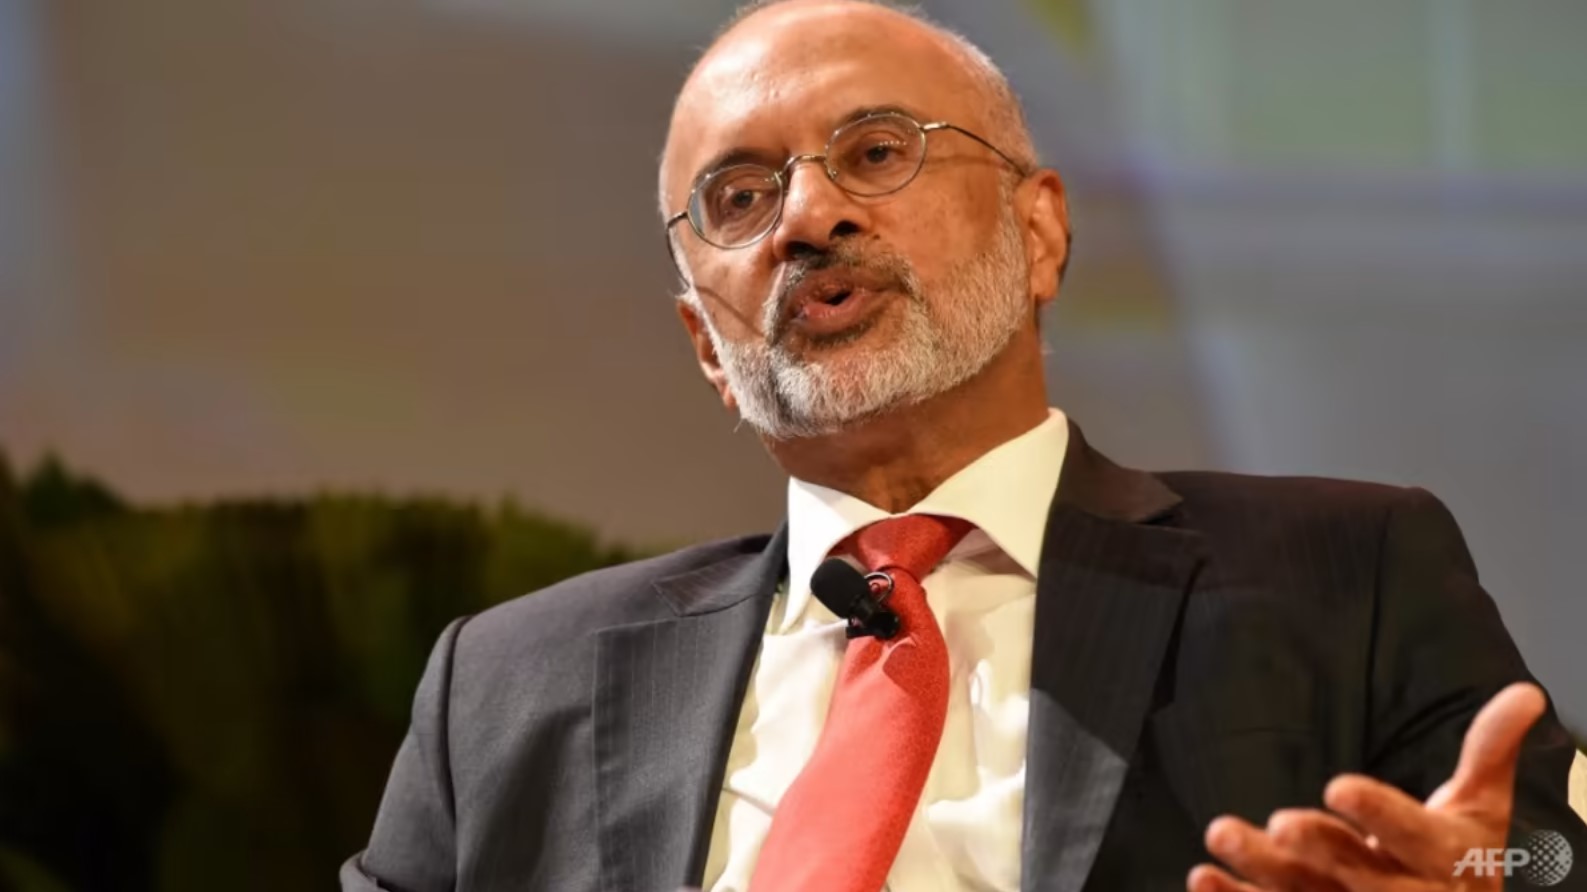 DBS CEO Piyush Gupta's 2022 Compensation Hits $15.4 Million Amid Bank's Stellar Year